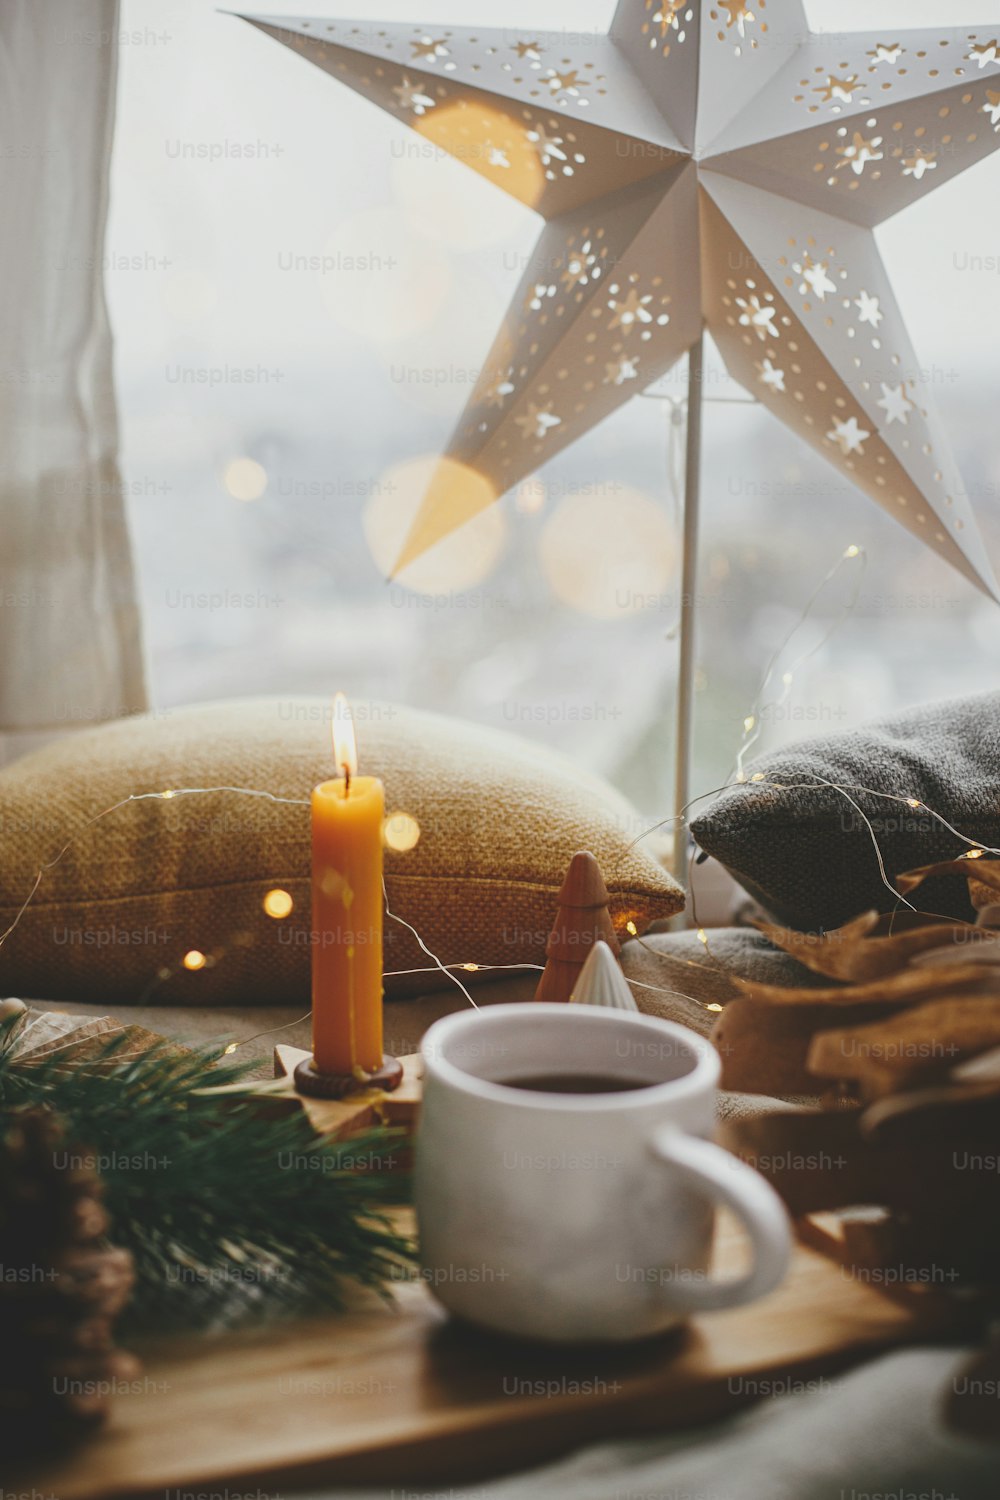 Estrella de navidad iluminada sobre fondo de taza de té caliente, luces de navidad, pinos, vela, almohadas en la ventana. Hygge invernal escandinavo. Acogedora casa. Momento mágico atmosférico